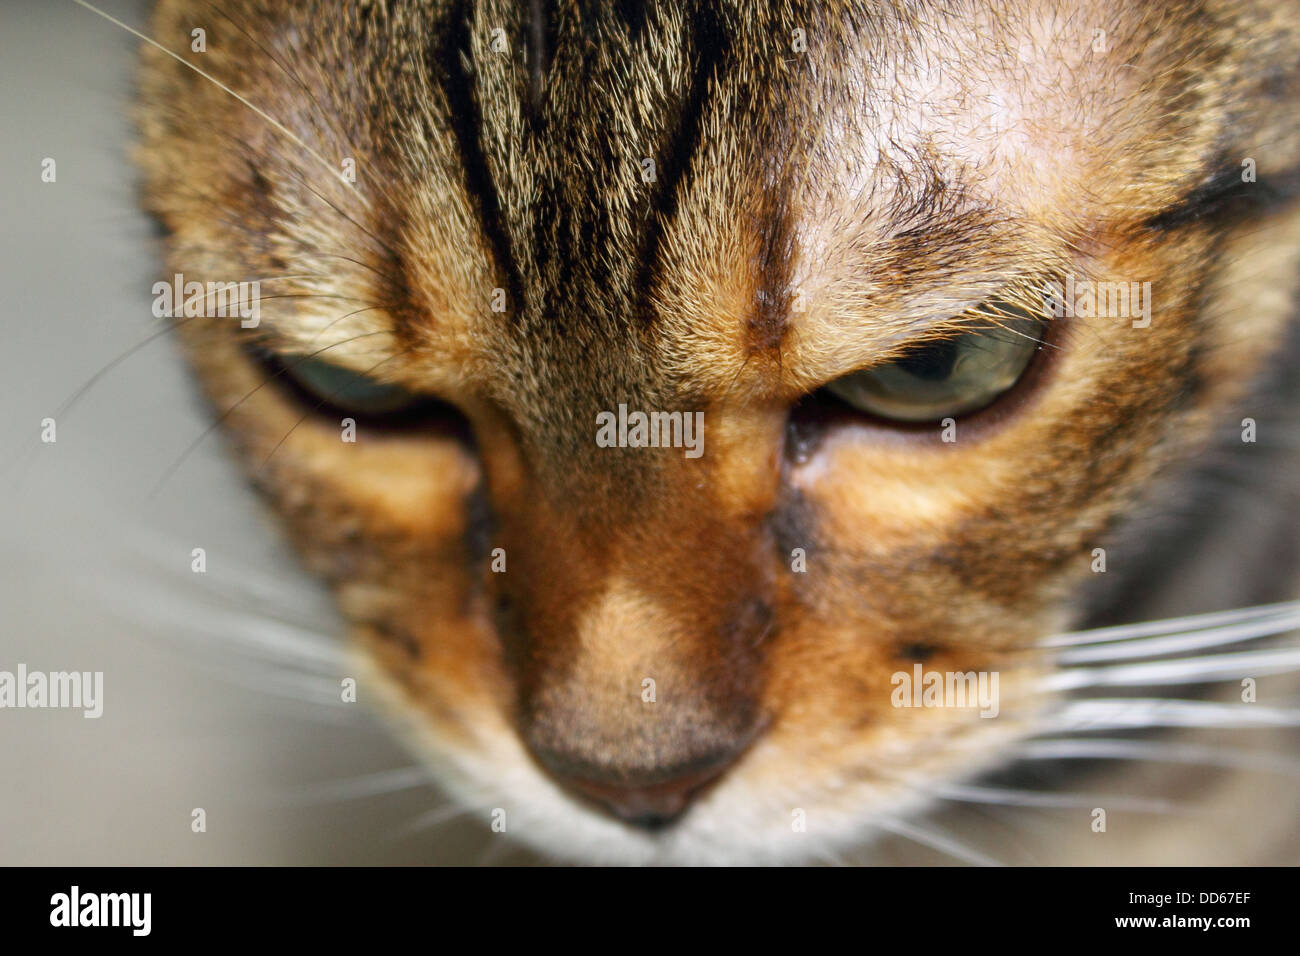 Bengal kitten close-up Stock Photo